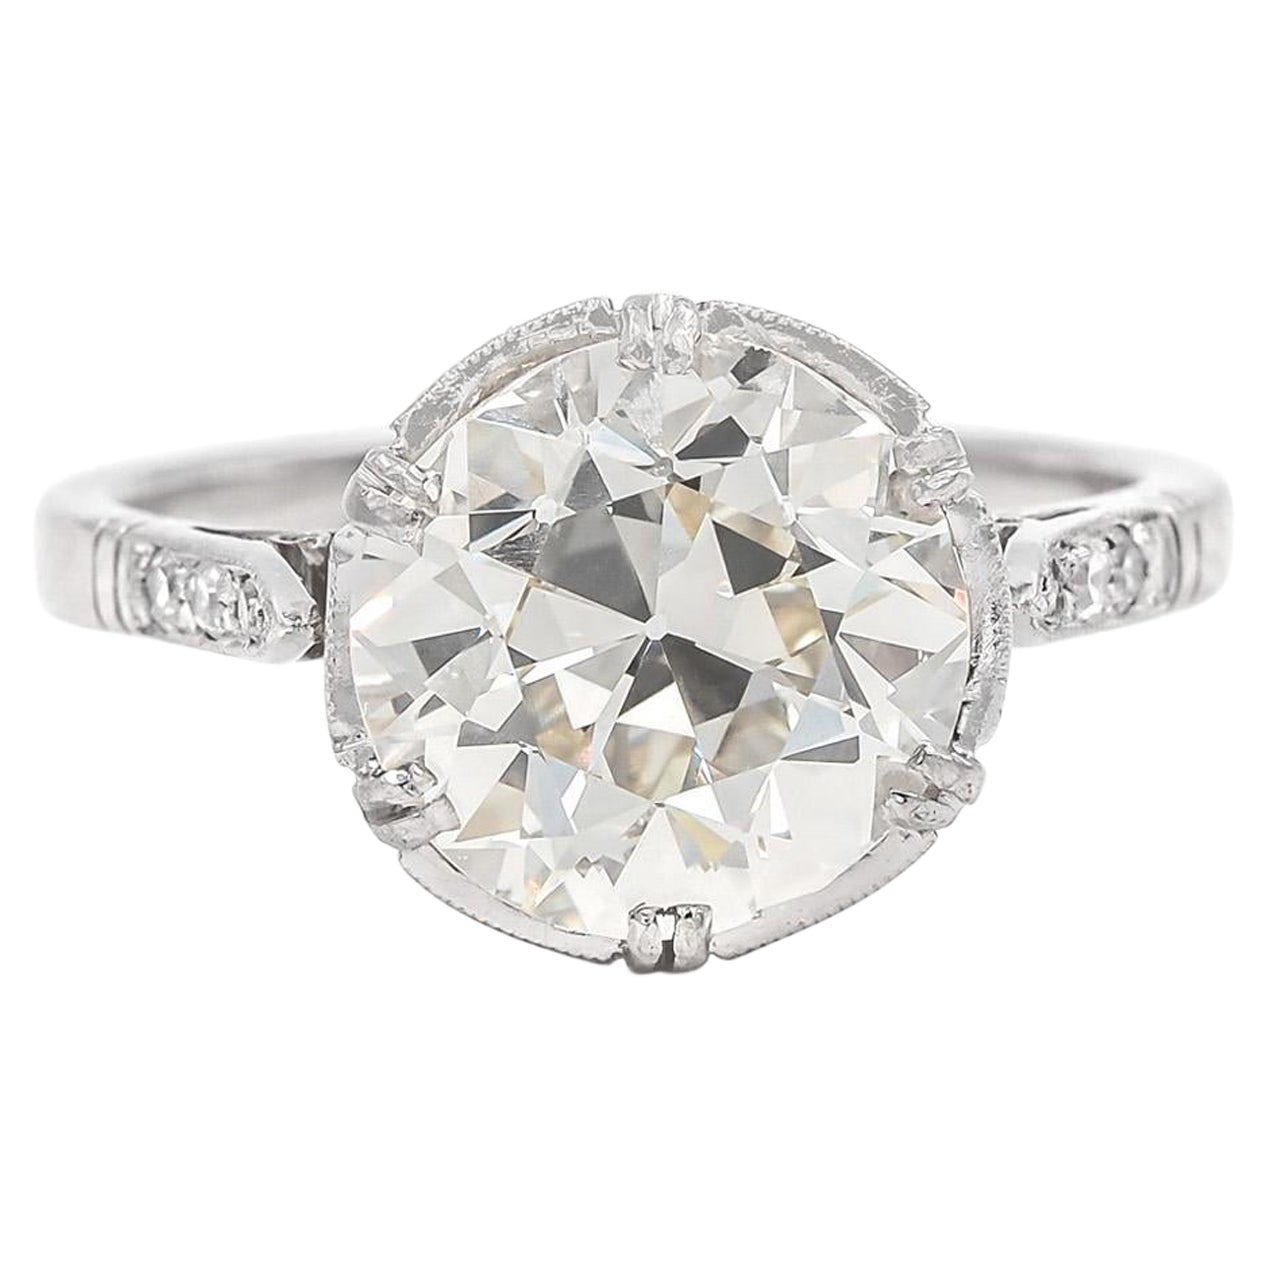 French Art Deco 3.93 Carat Old European Cut Diamond Engagement Ring